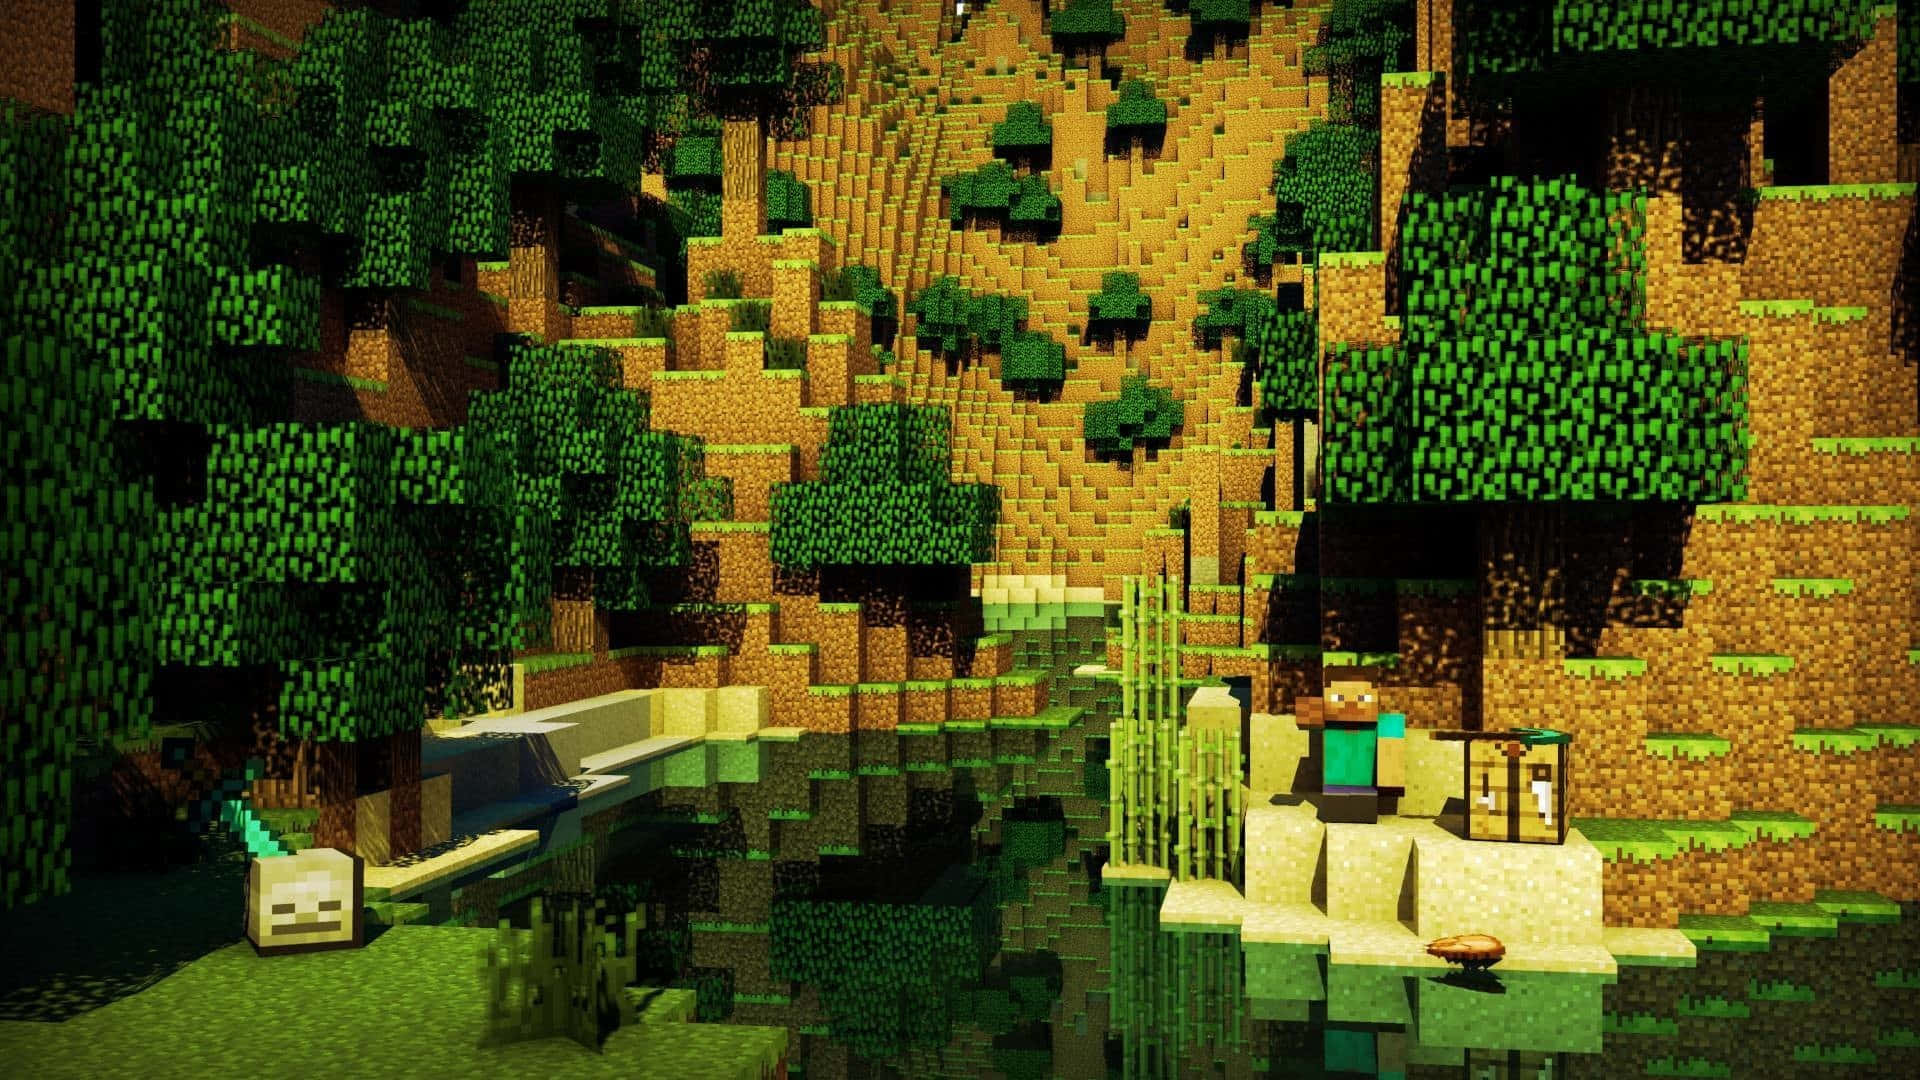 Minecraftfluss Und Bäume Bild